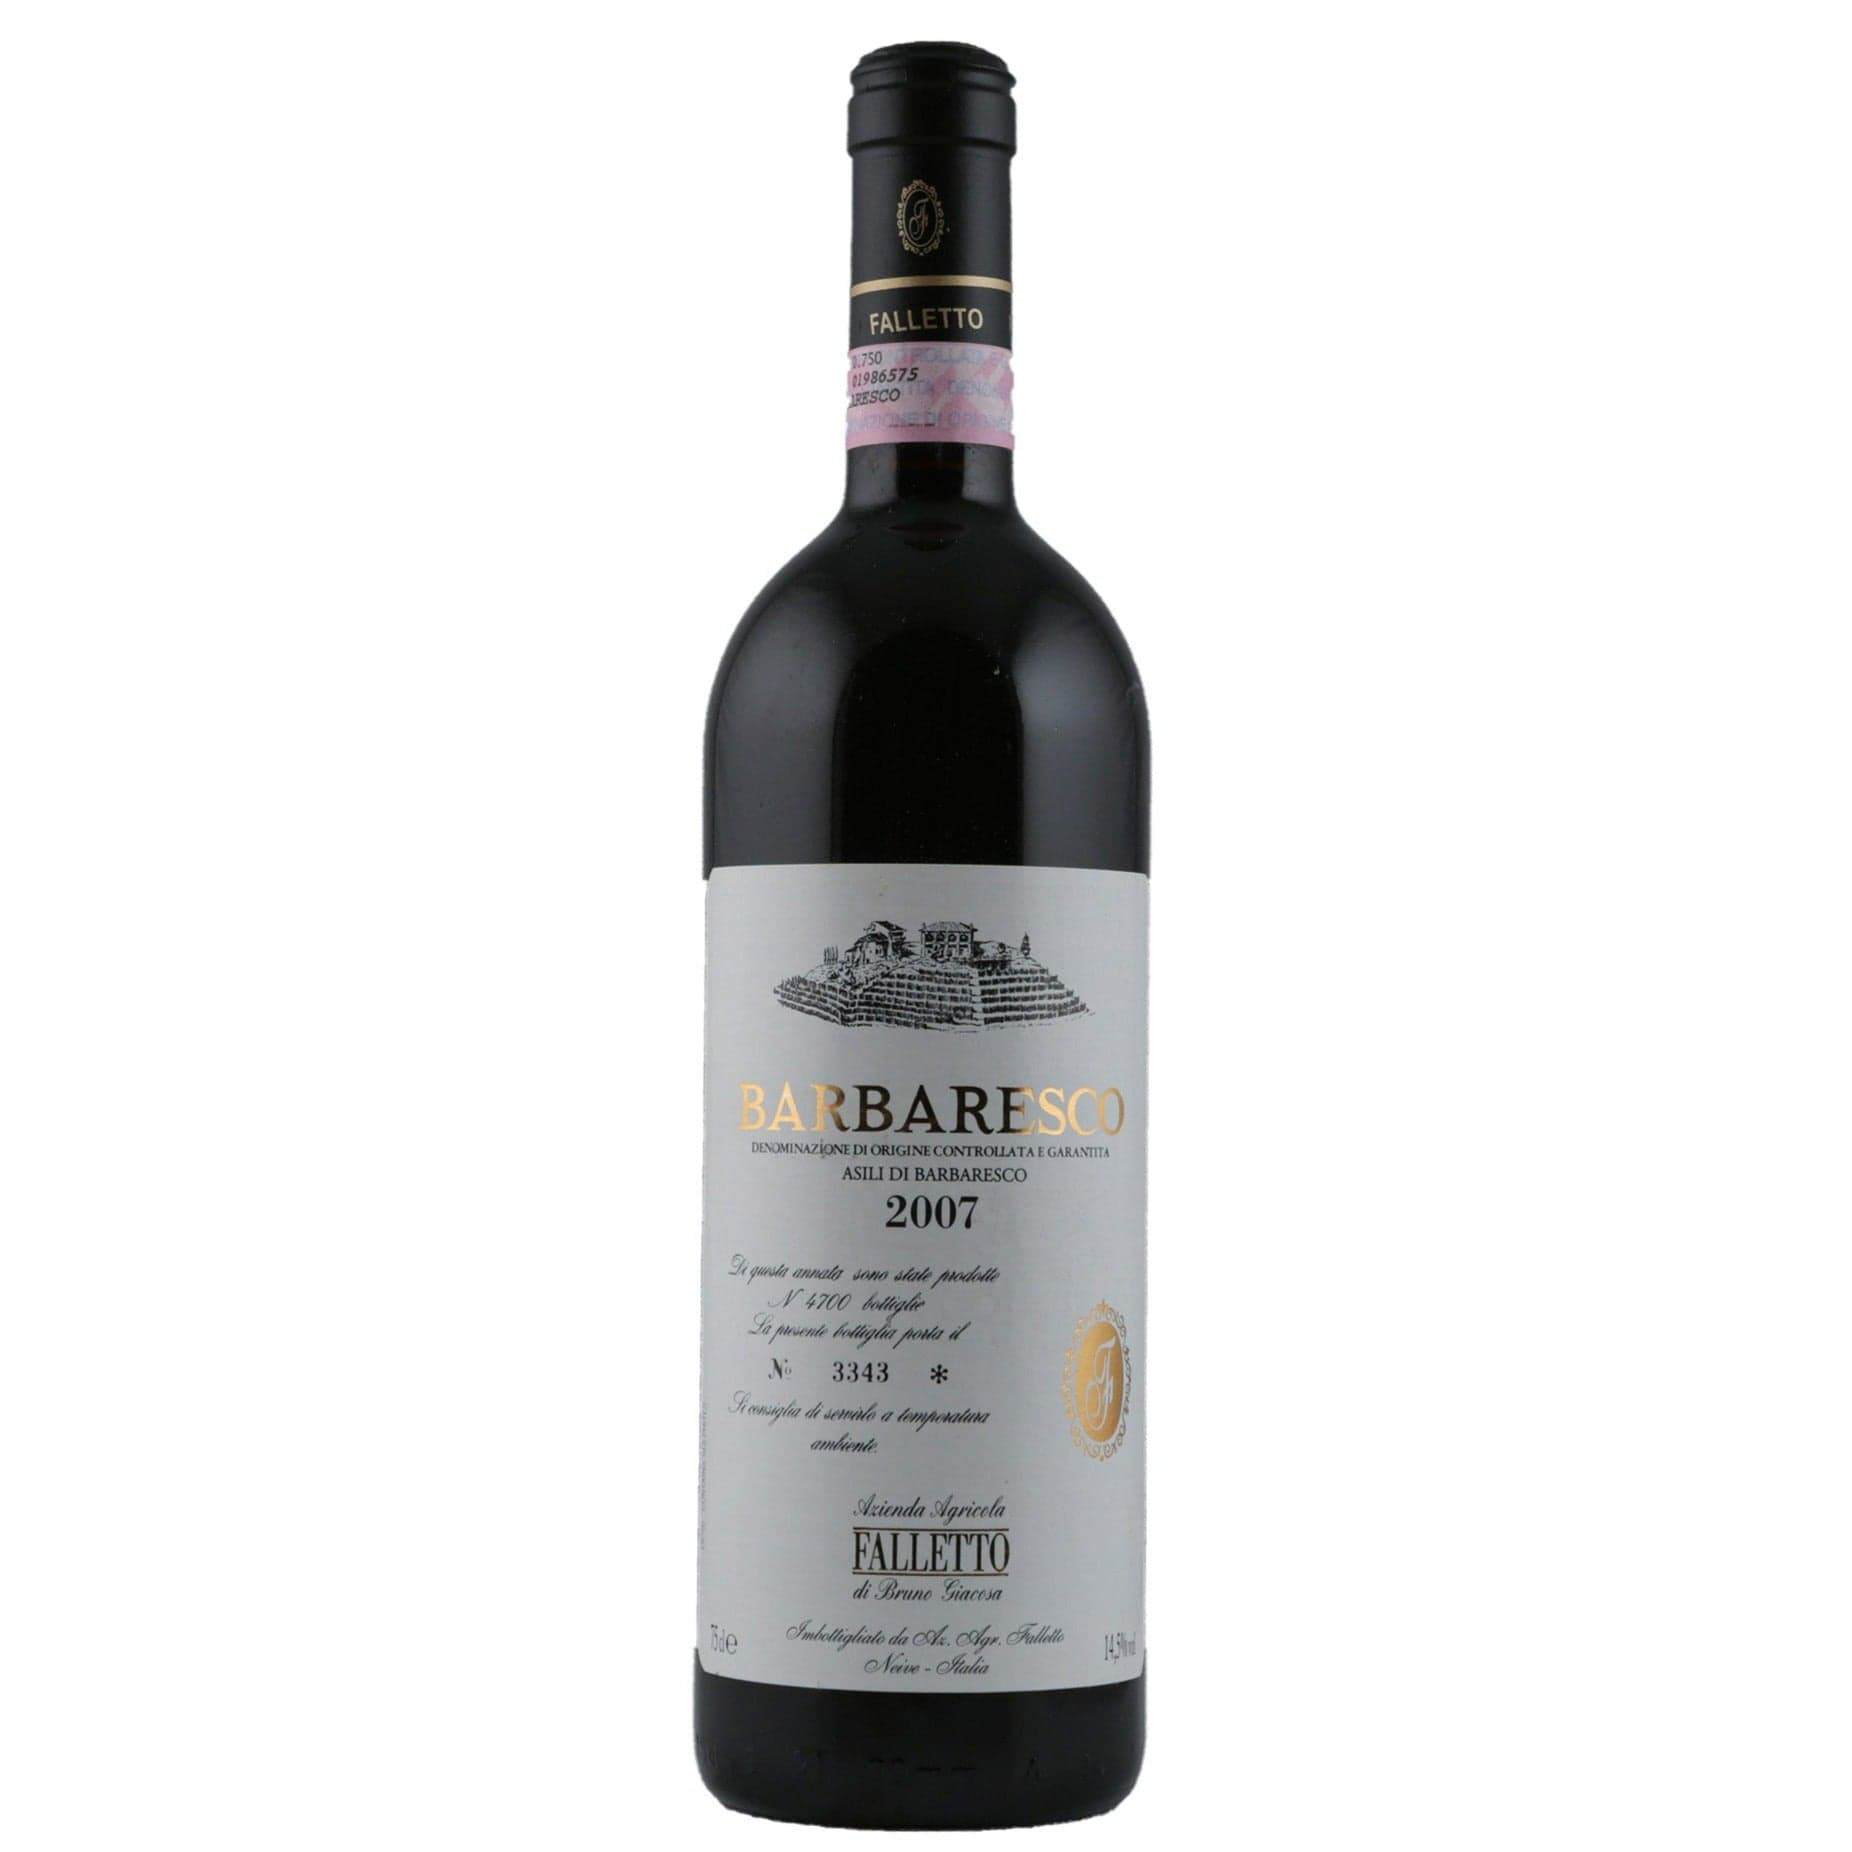 Single bottle of Red wine Bruno Giacosa, Asili, Barbaresco, 2007 100% Nebbiolo